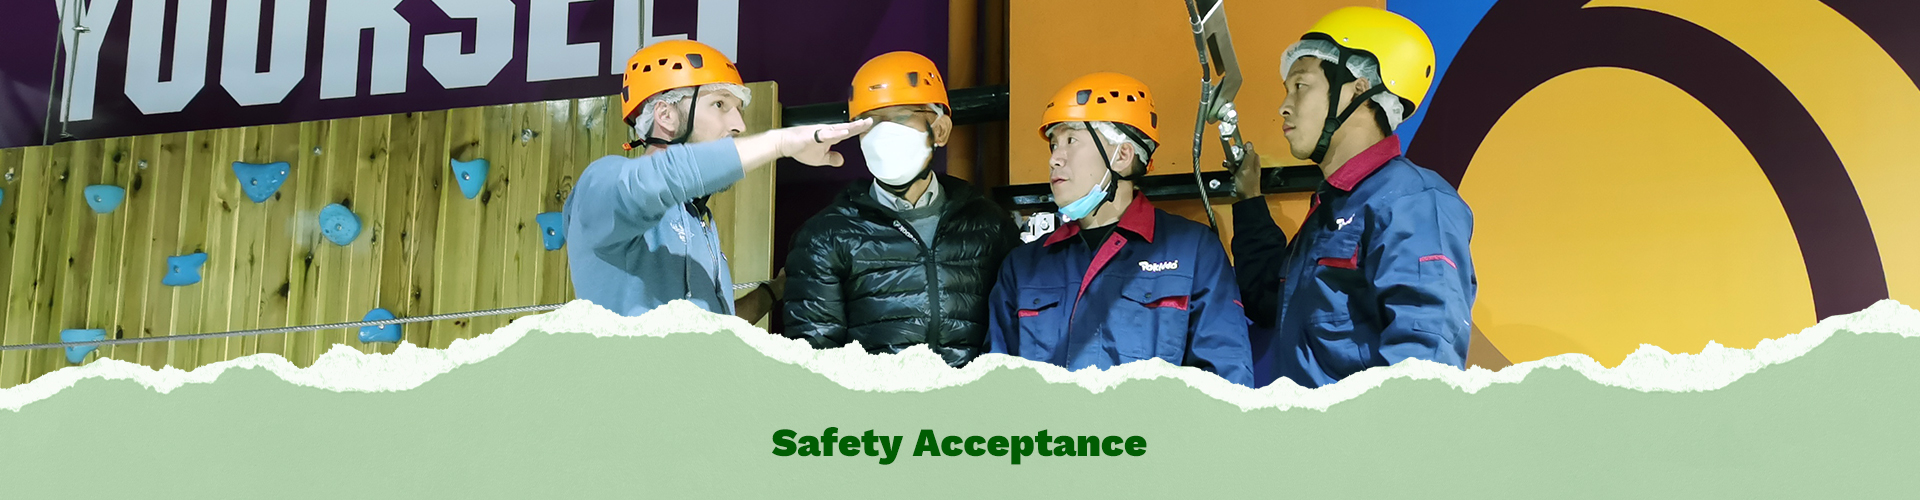 Safety-Acceptance